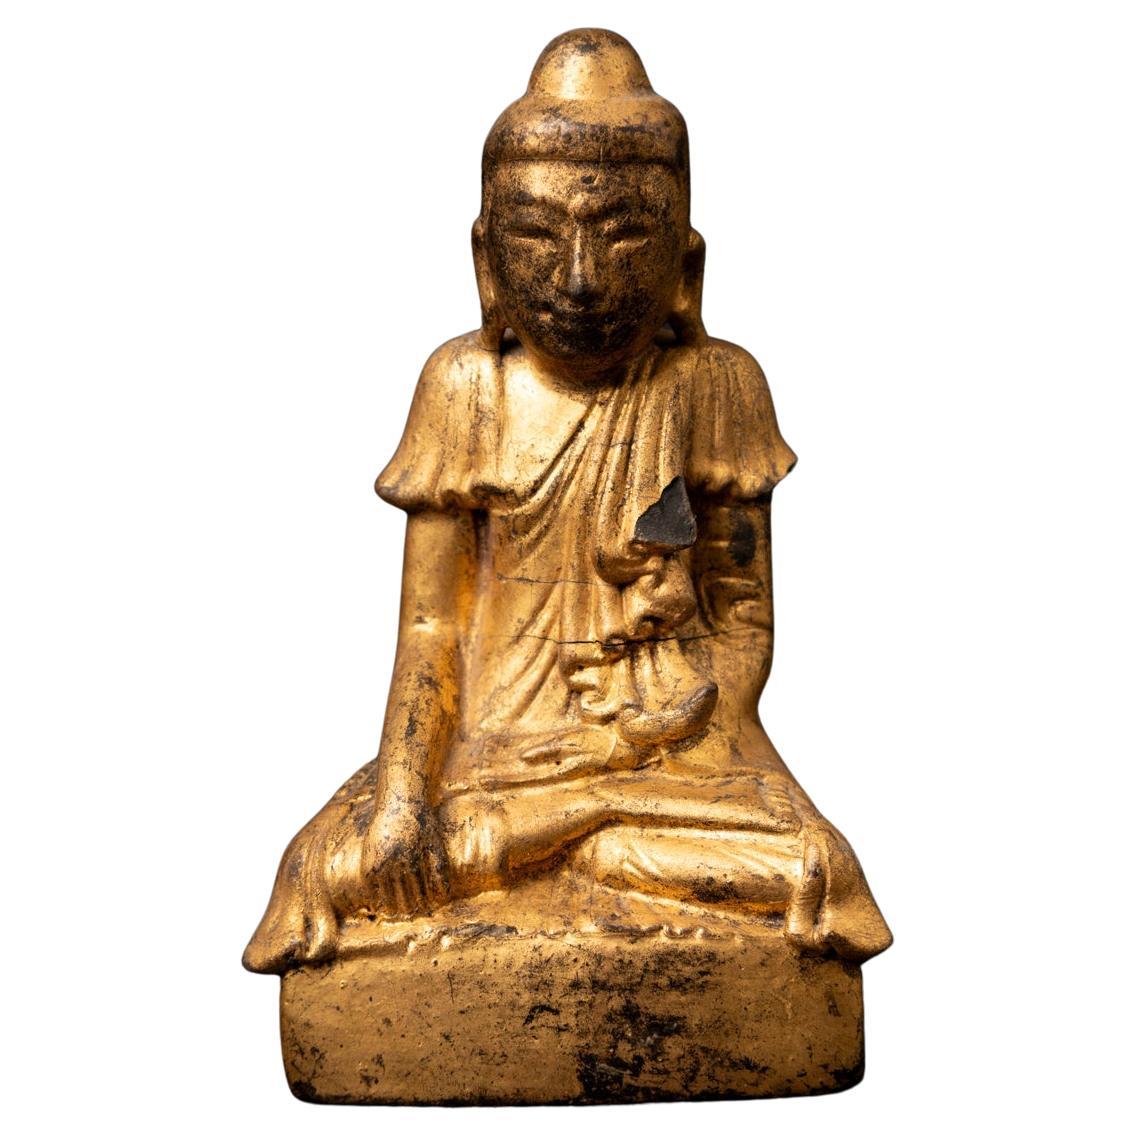 19th century Old wooden Burmese Shan Buddha statue from Burma - Originalbuddhas For Sale